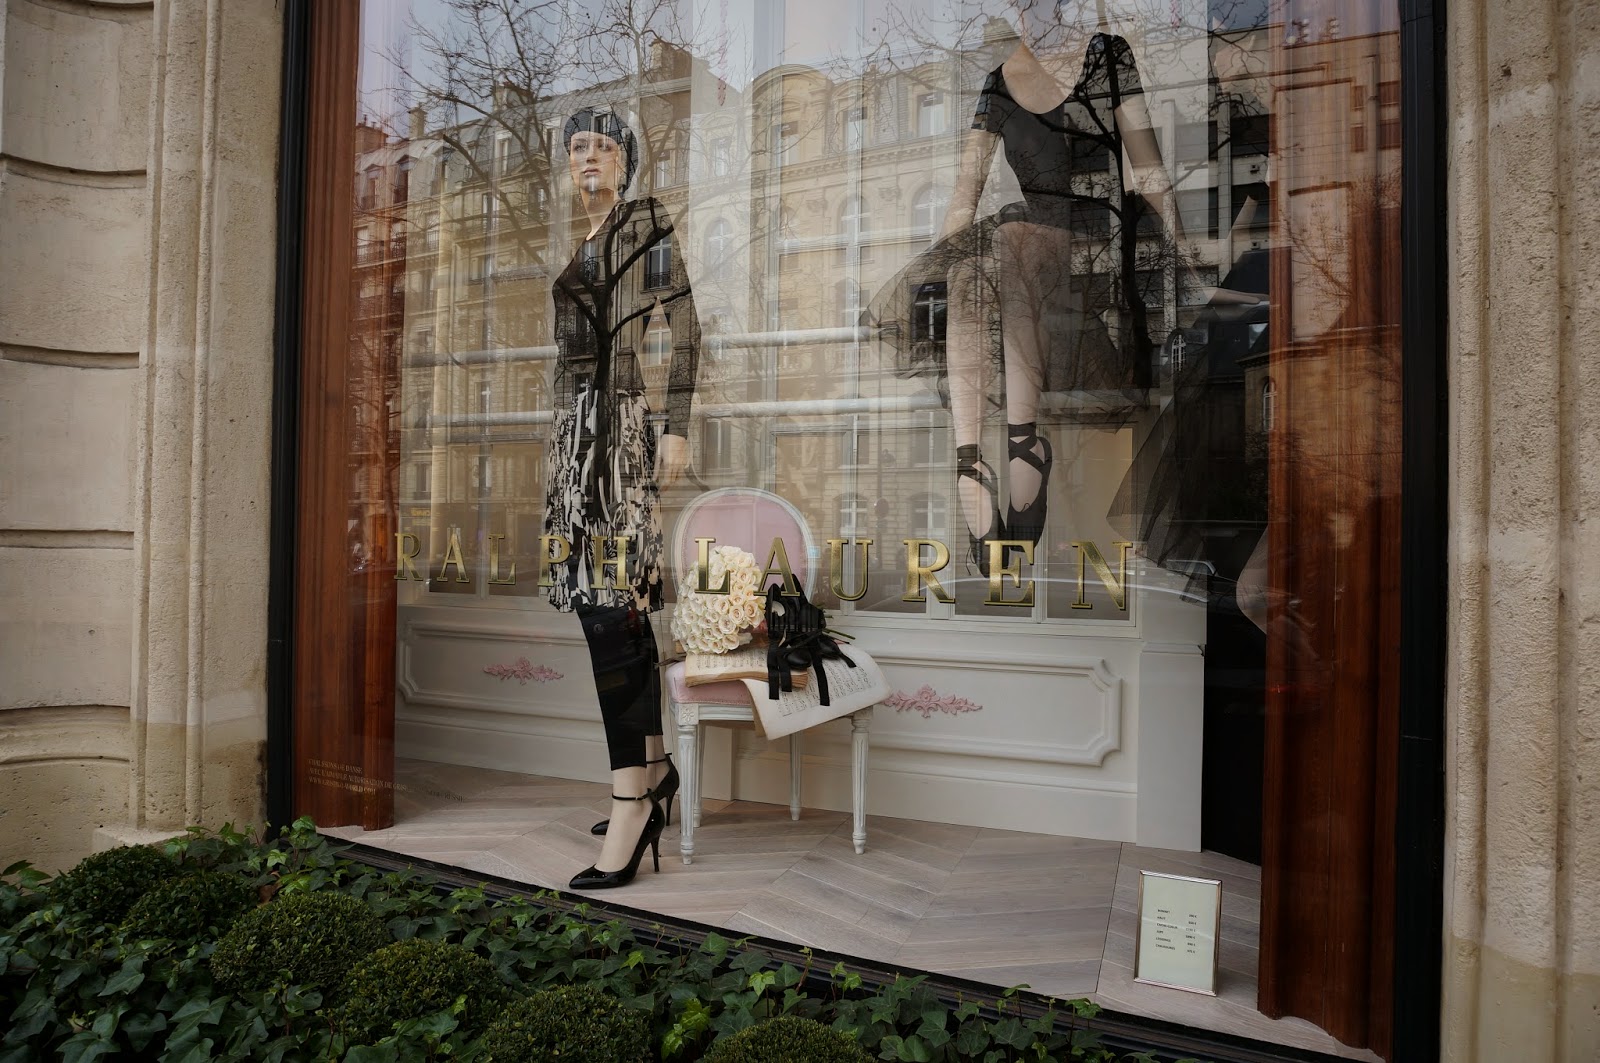 vignette design: Window Shopping and Parisian Storefronts